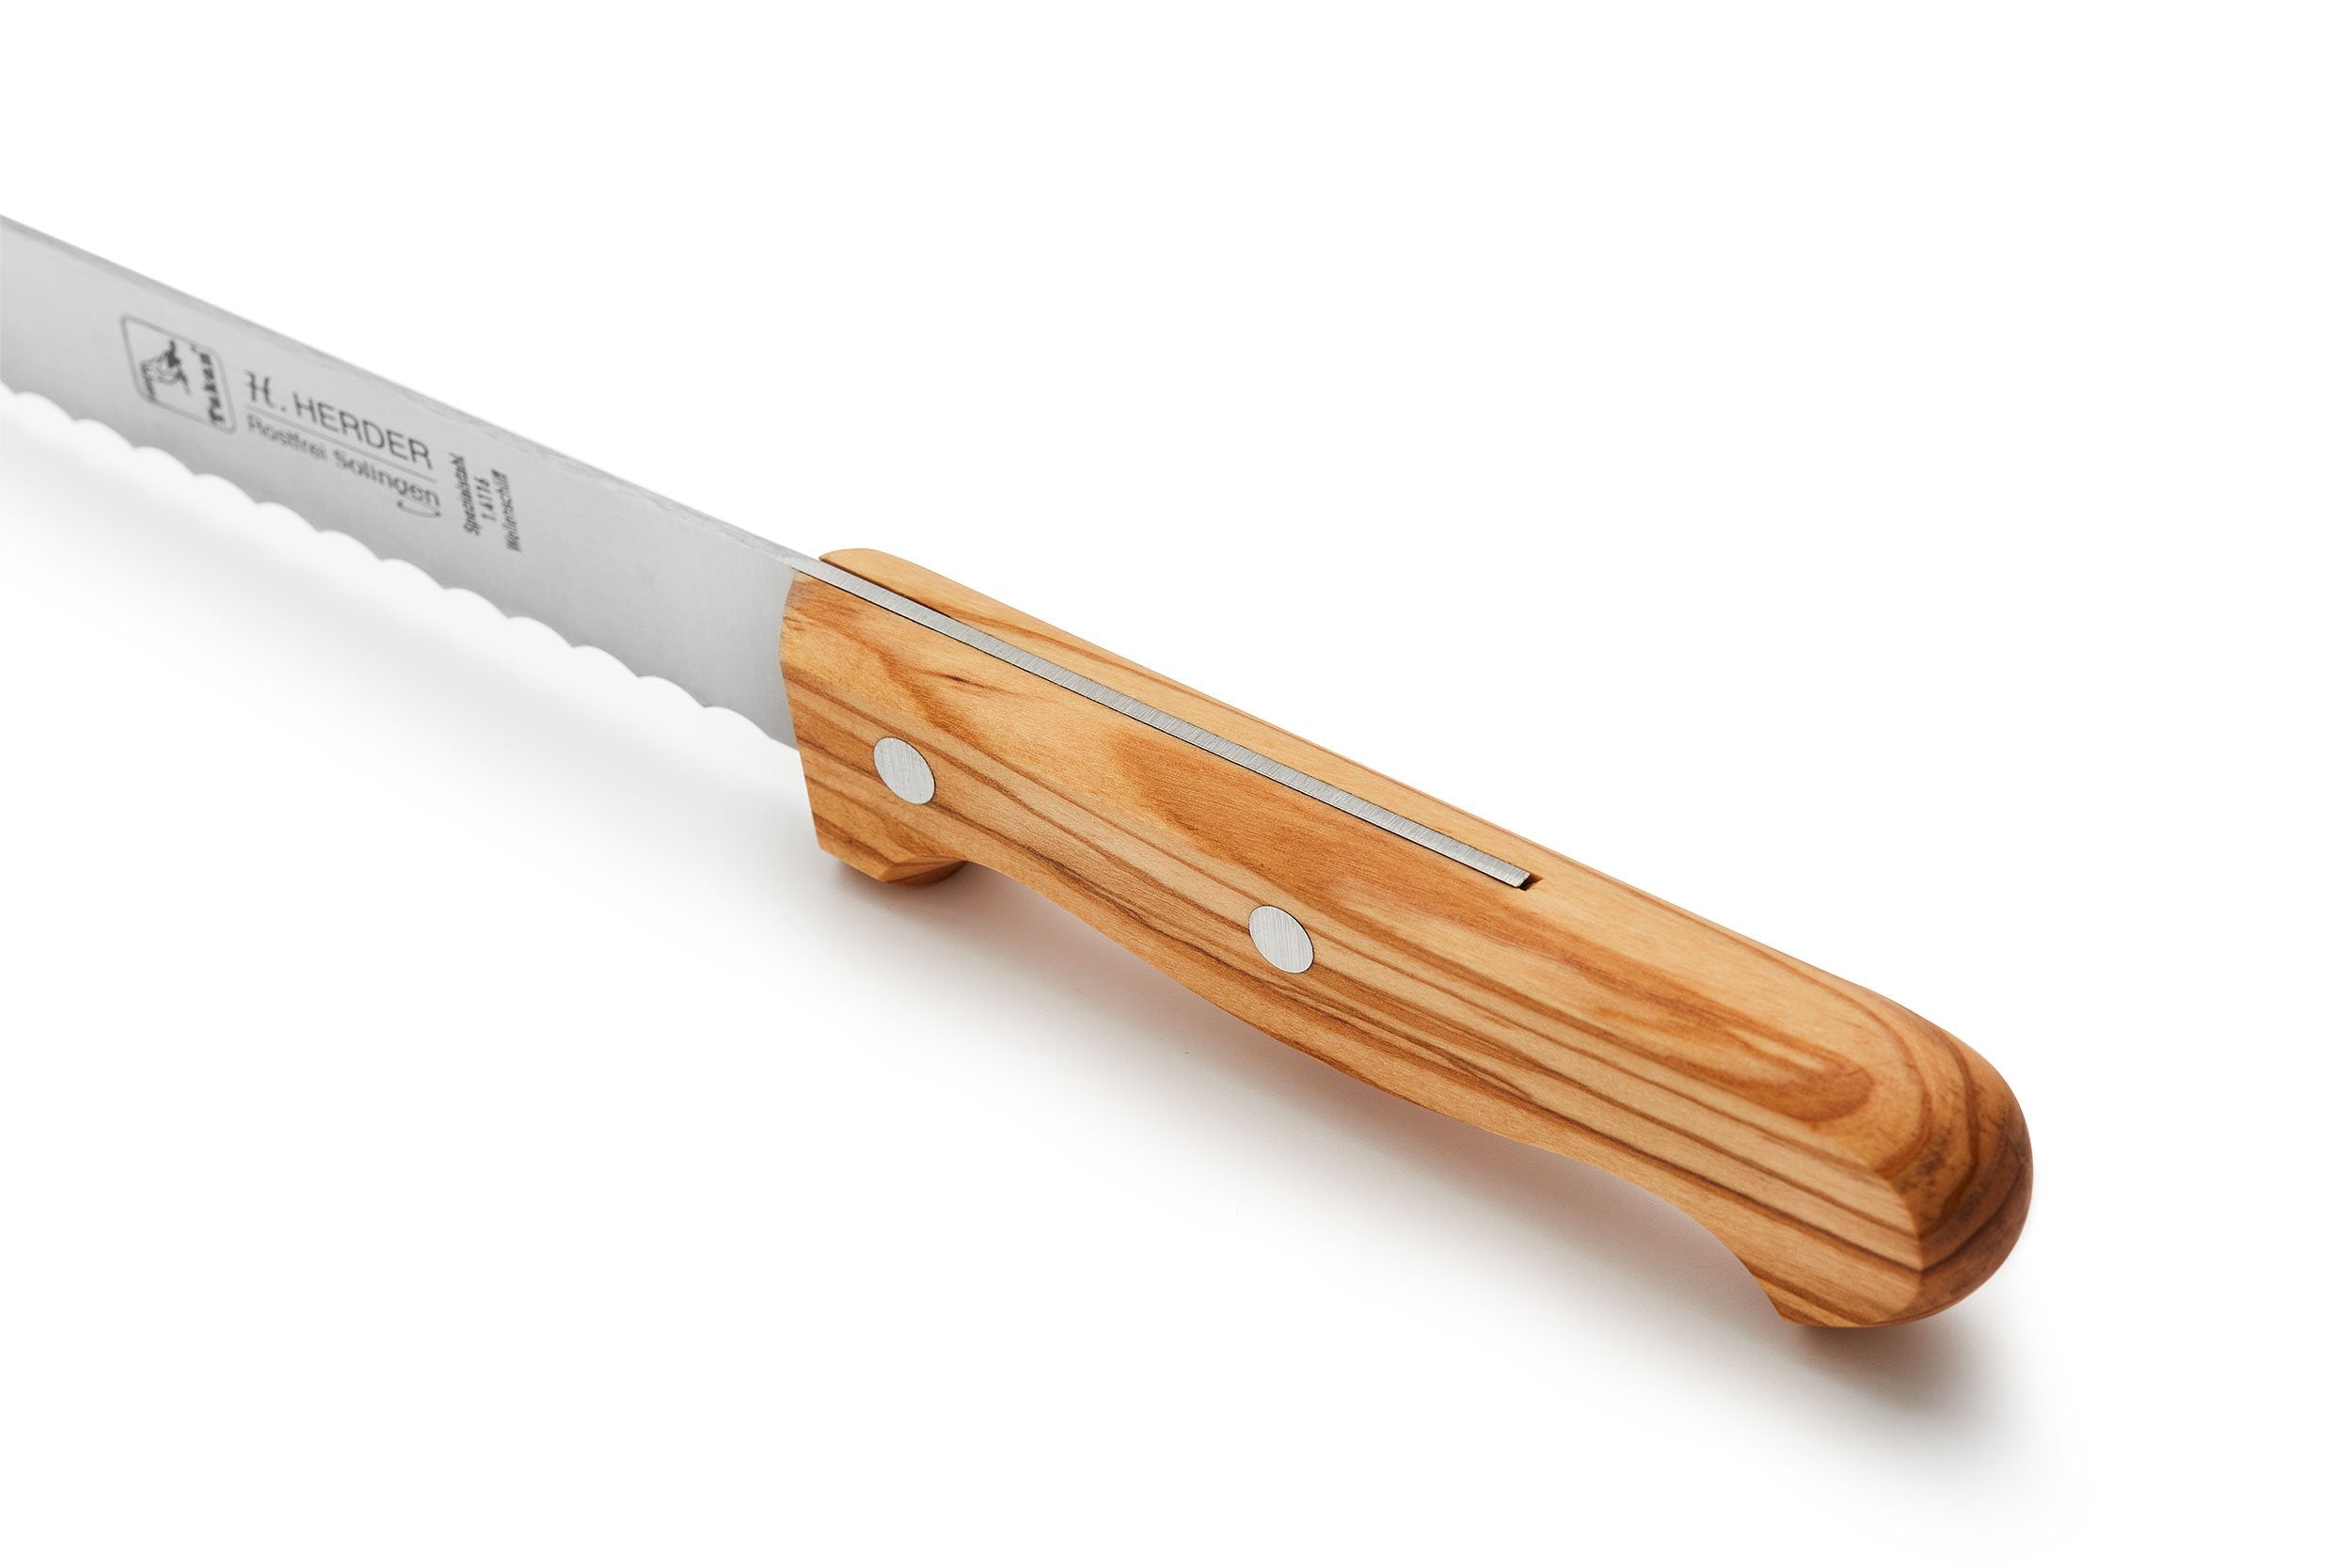 Bread knife olive wood handle 20cm shaft